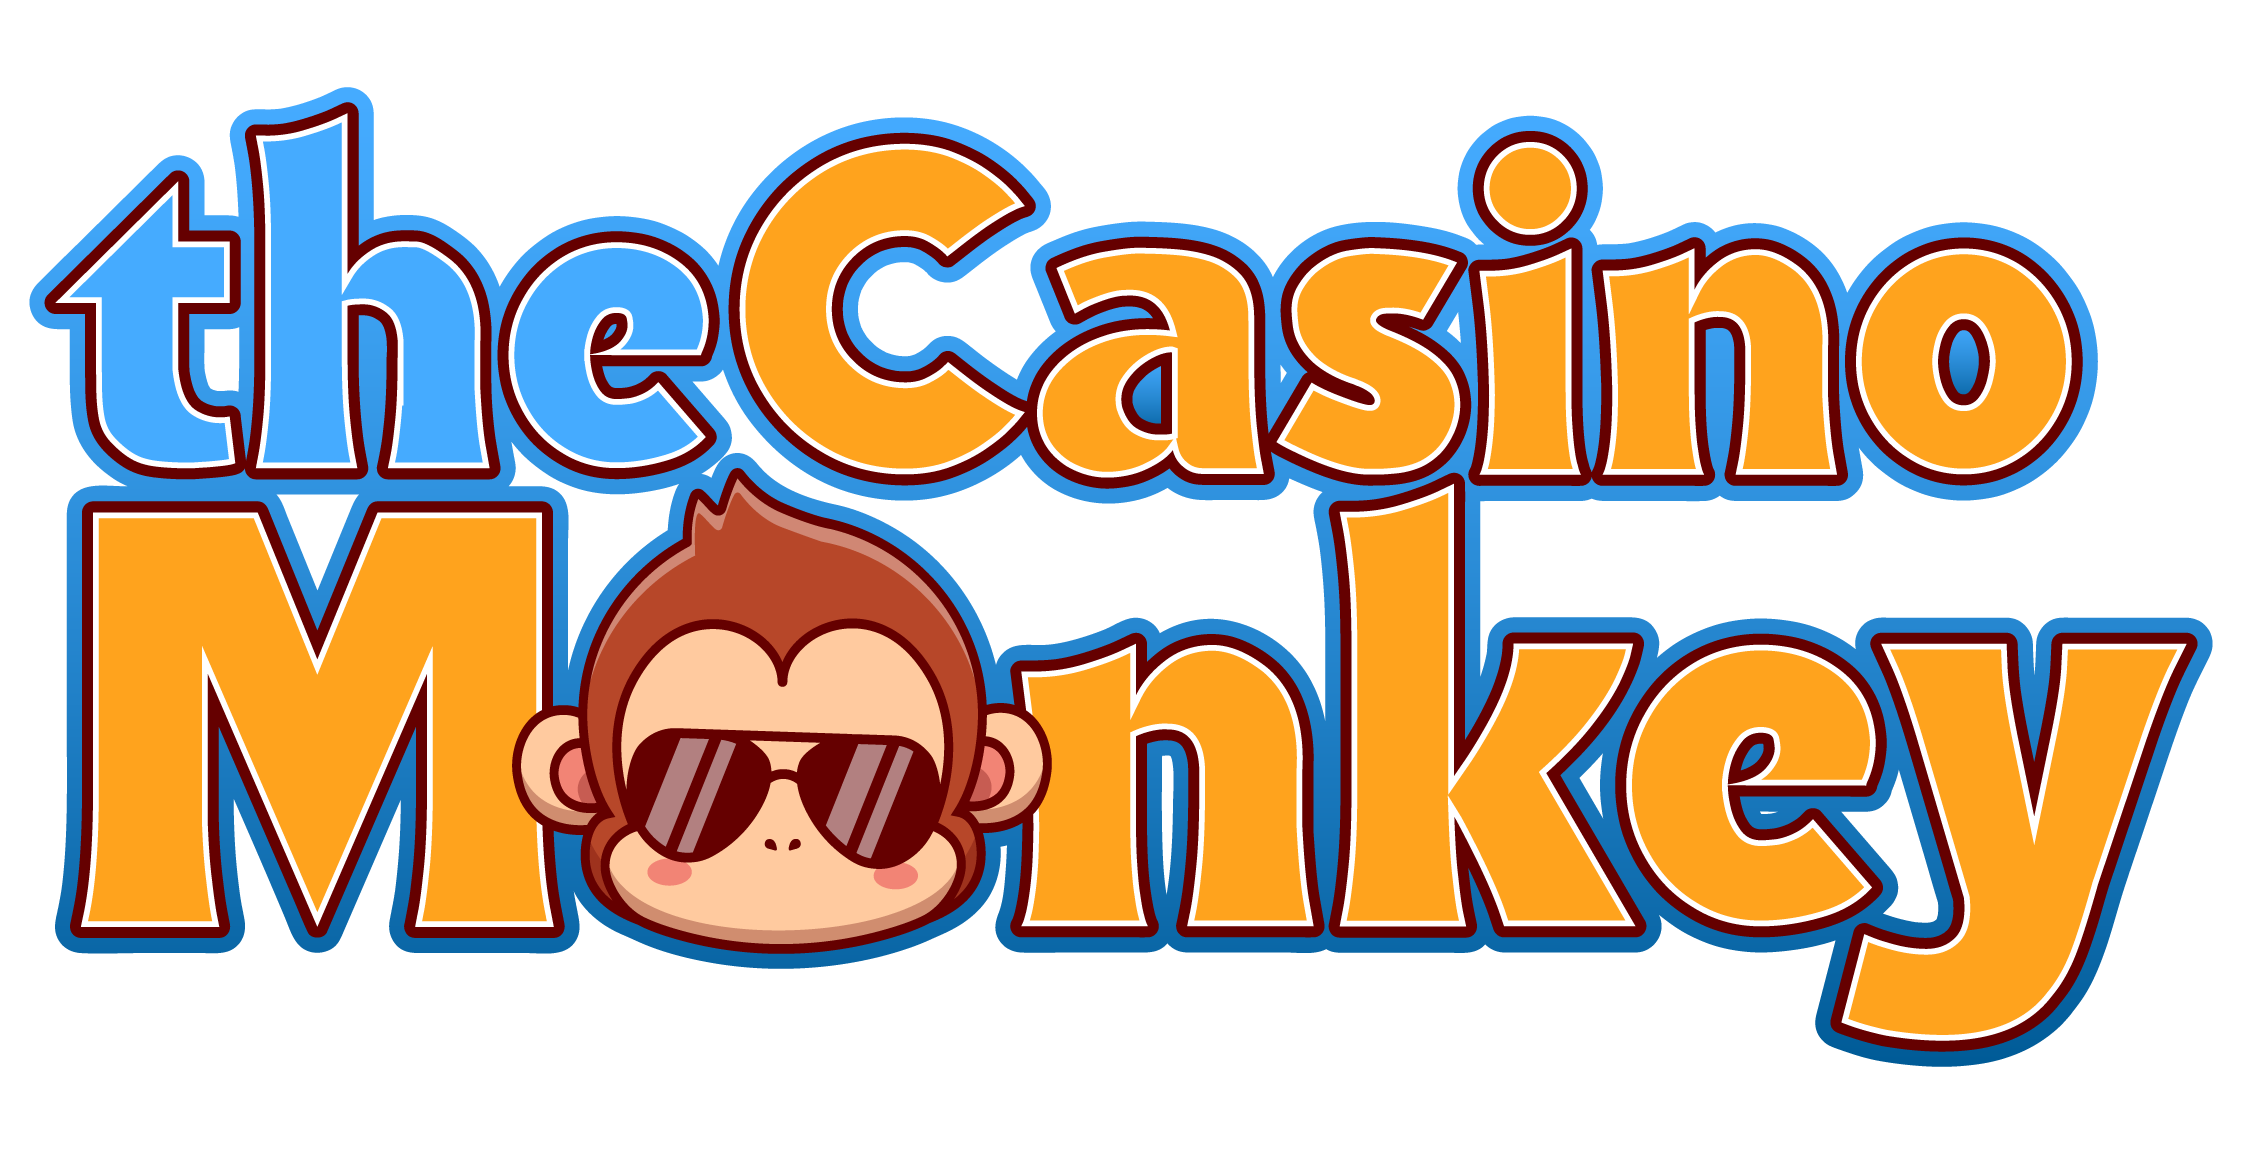 The Casino Monkey